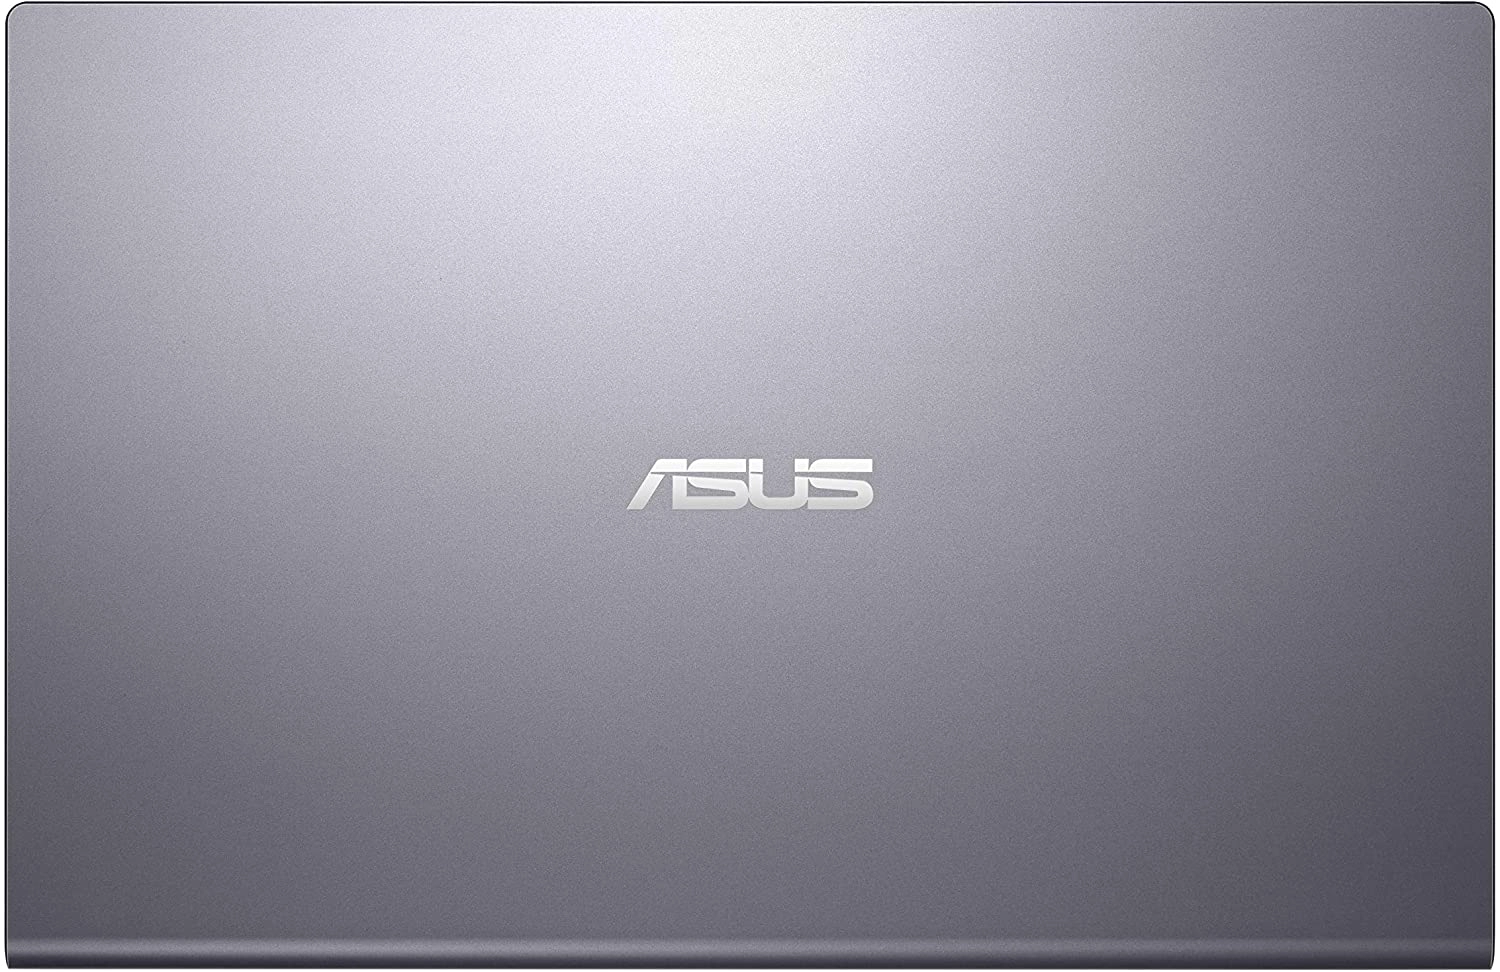 Asus F515JA-BR097T laptop image